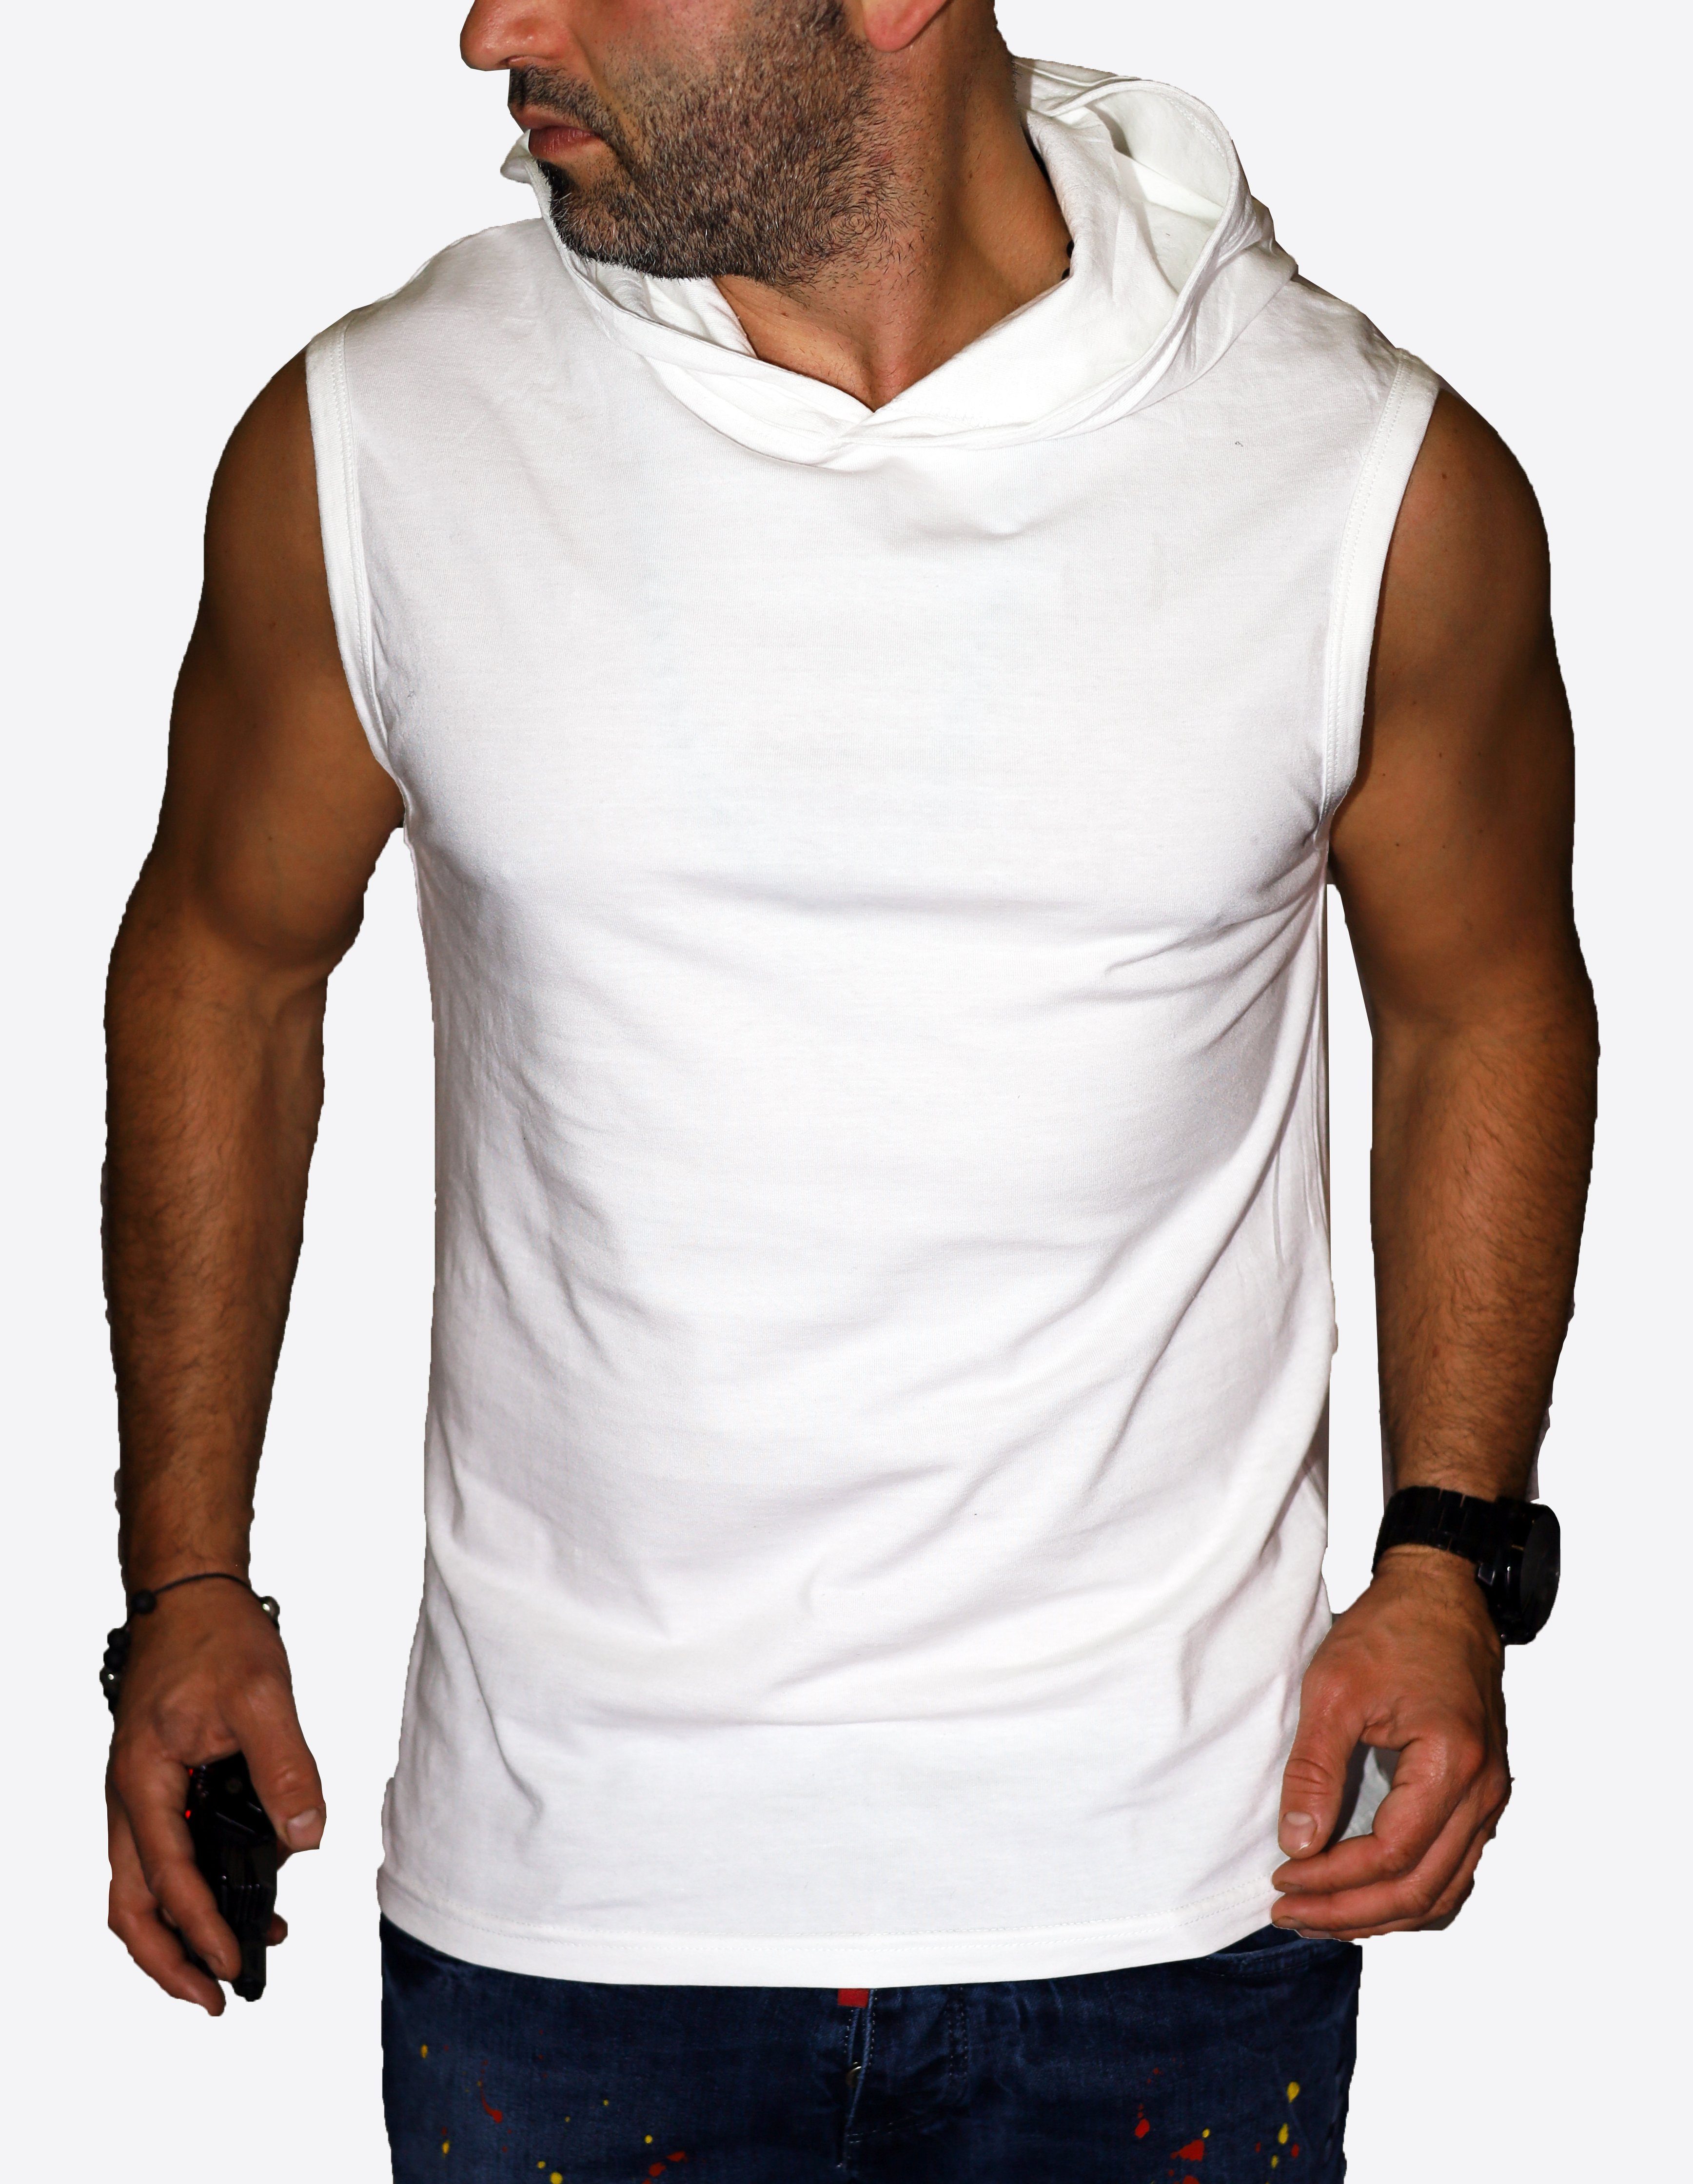 RMK T-Shirt Tanktop Muscleshirt Muskelshirt